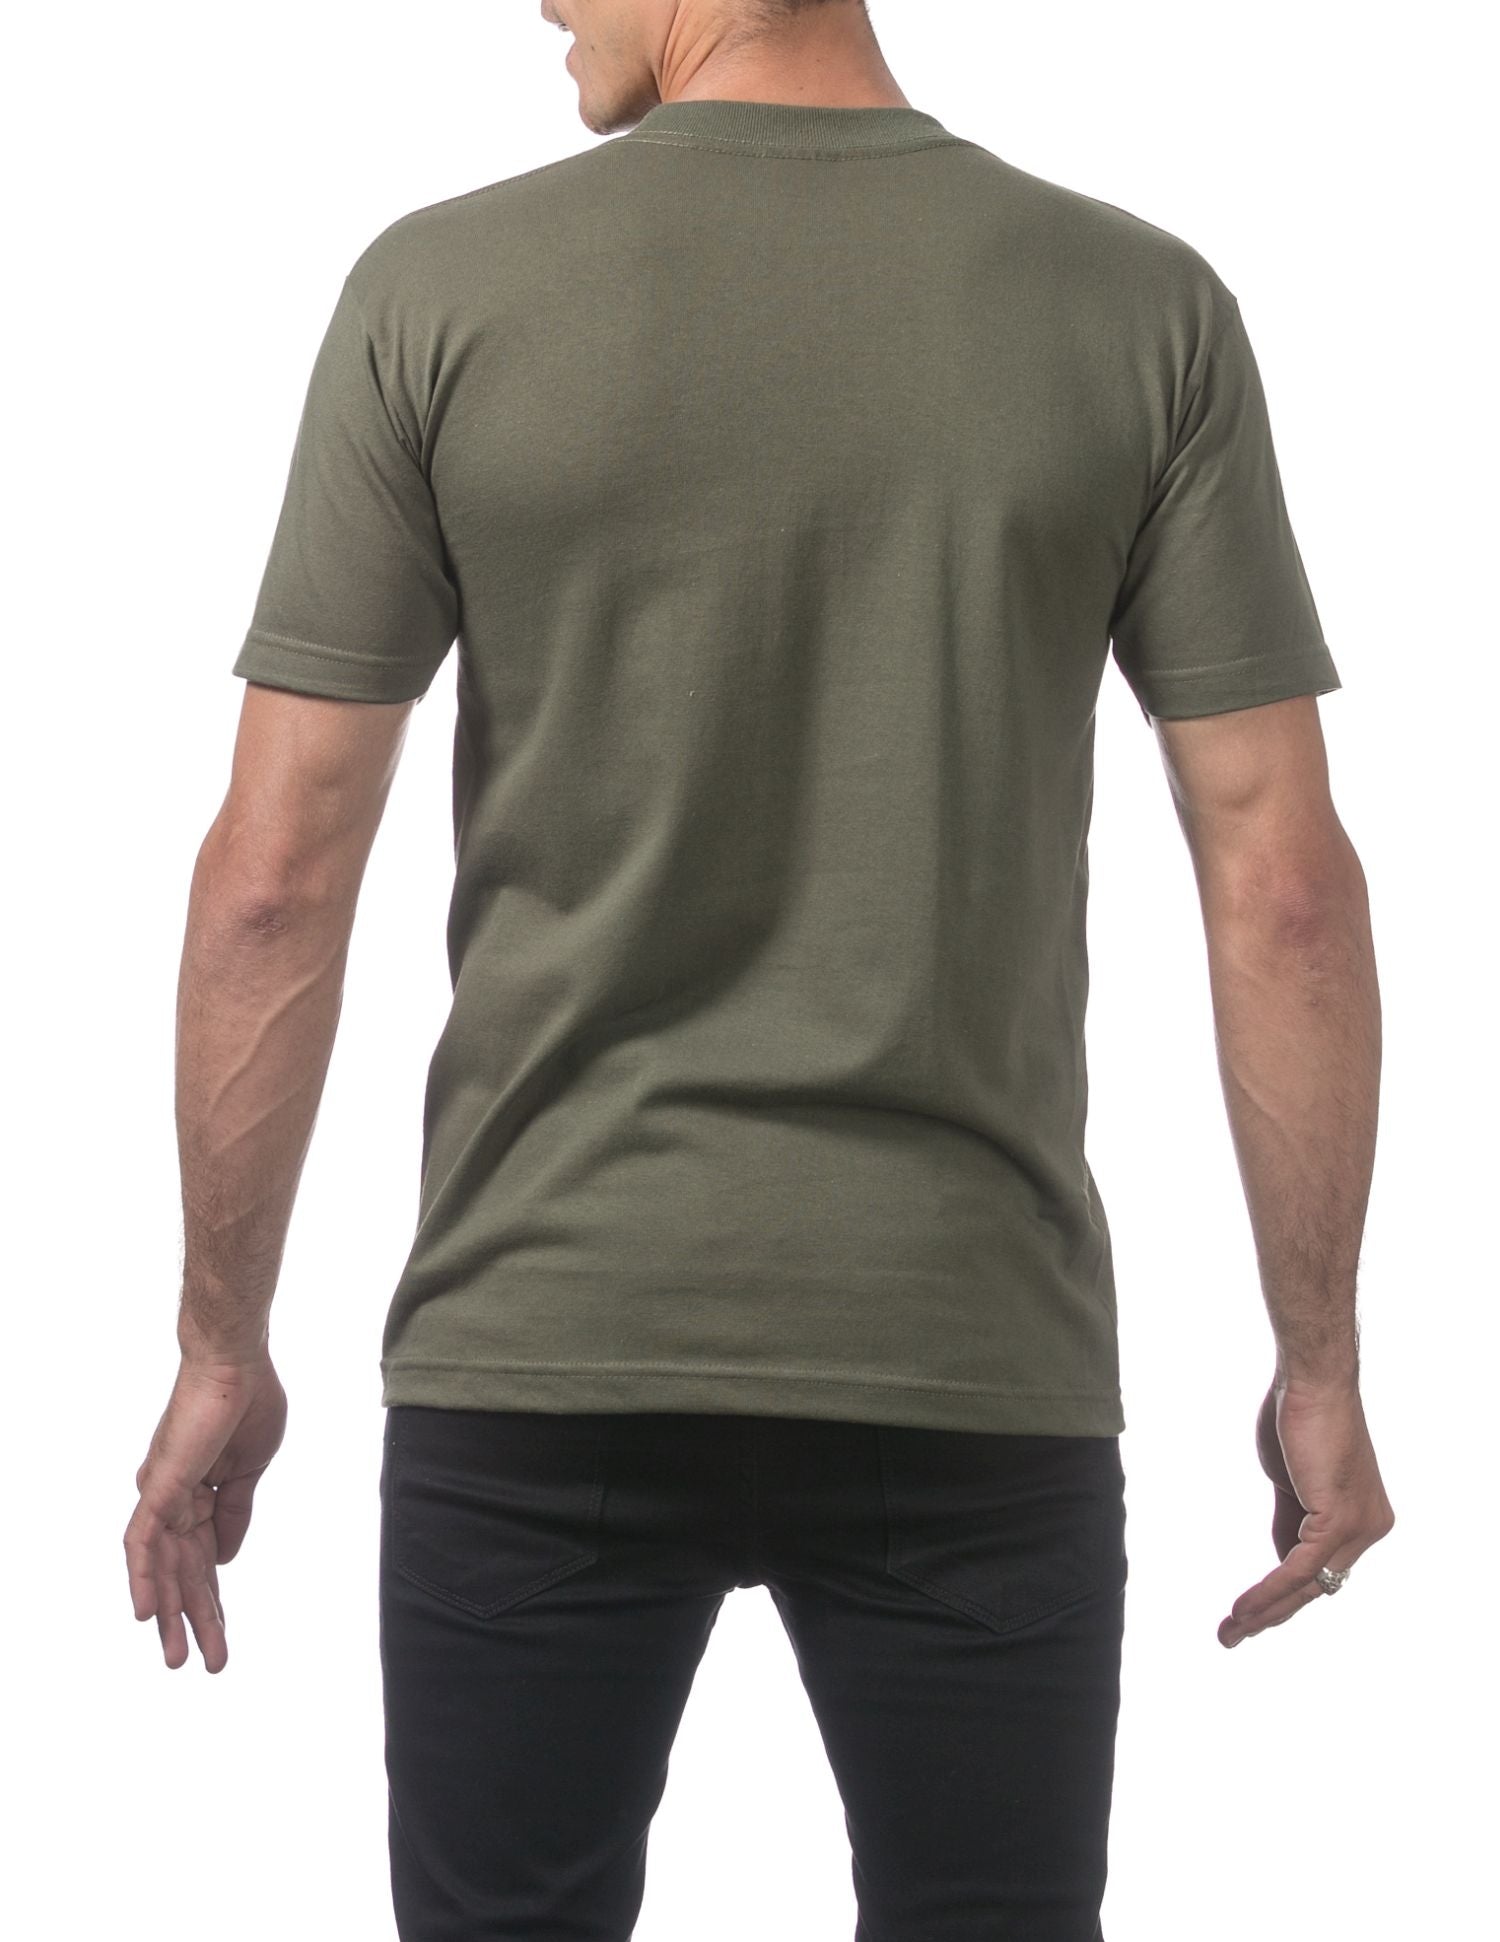 Pro Club Men's Comfort Cotton Short Sleeve T-Shirt - Olive Green - Small - Pro-Distributing